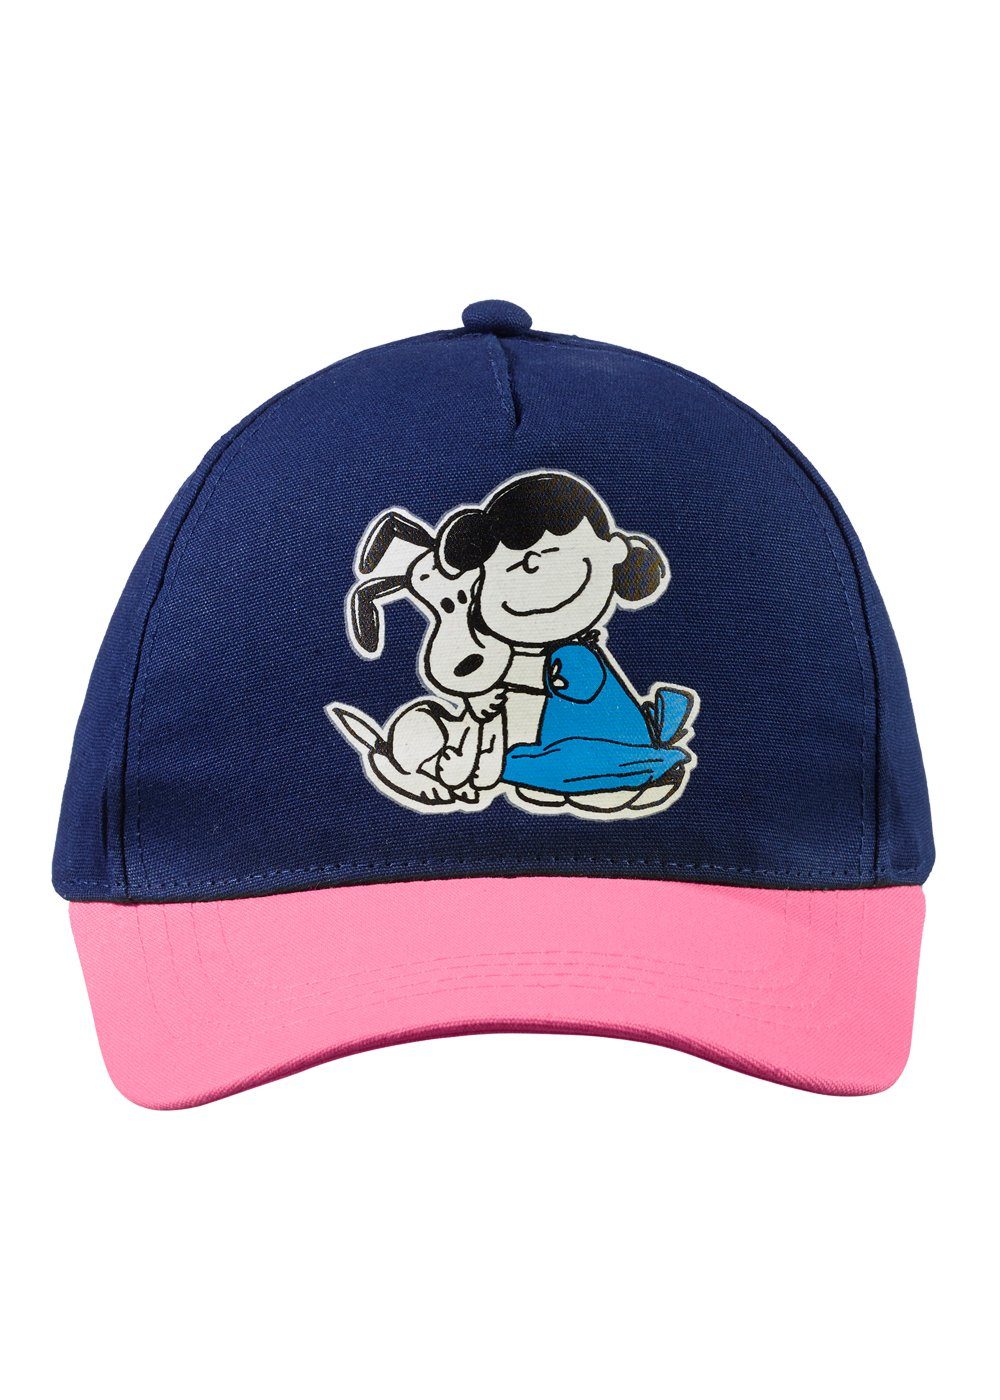 ONOMATO! Baseball Cap Peanuts - Snoopy und Lucy van Pelt Mädchen Kappe